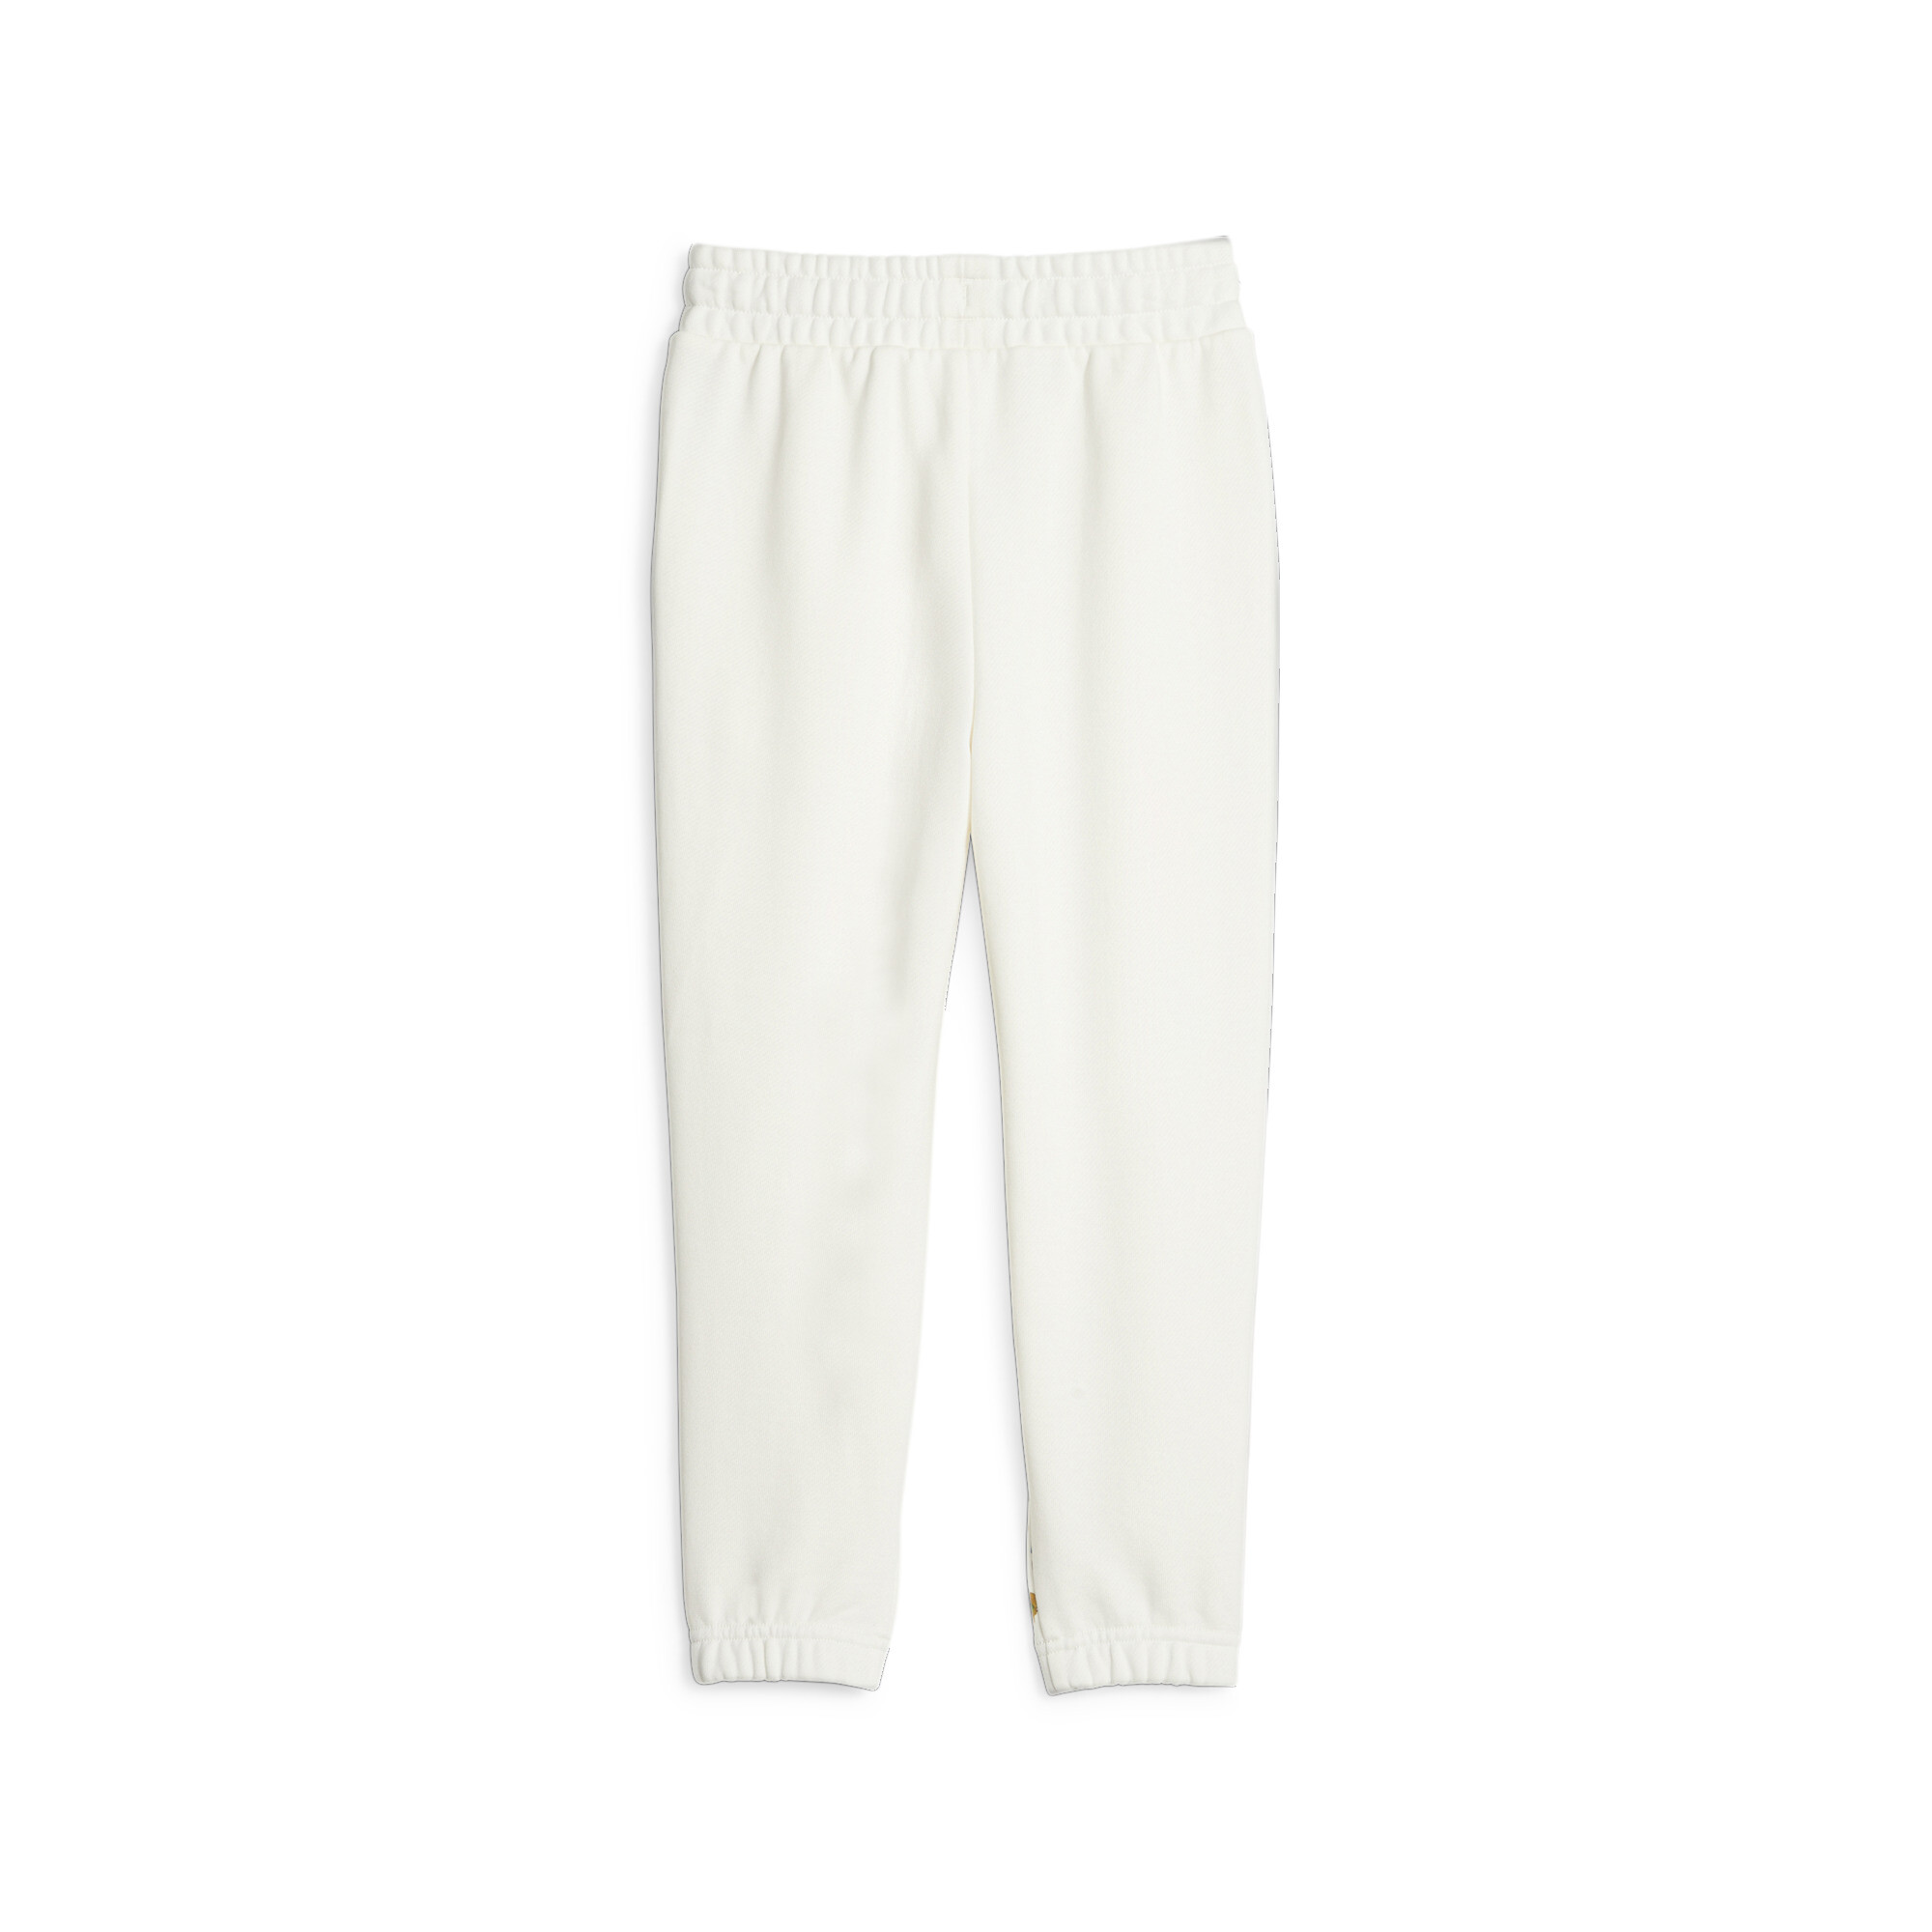 PUMA X LIBERTY Sweatpants In White, Size 11-12 Youth